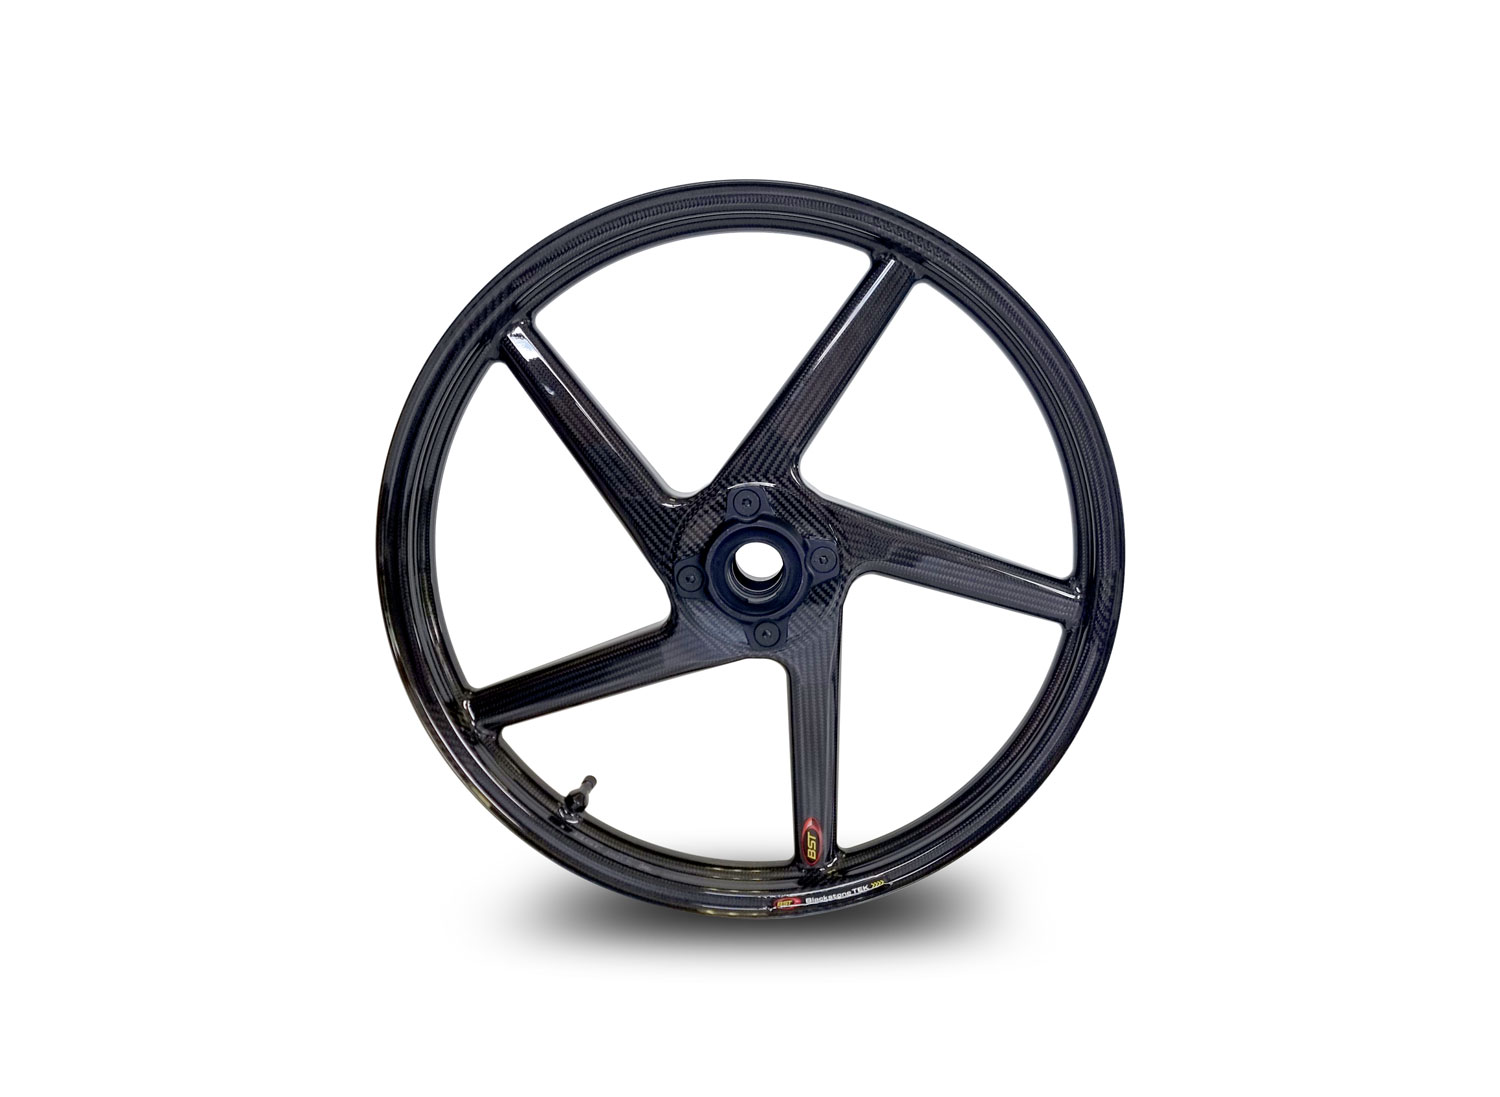 Buy BST 5-Spoke 17 x 1.85 Front Wheel - Yamaha Crypton SKU: 175698 at the price of US$ 1050 | BrocksPerformance.com